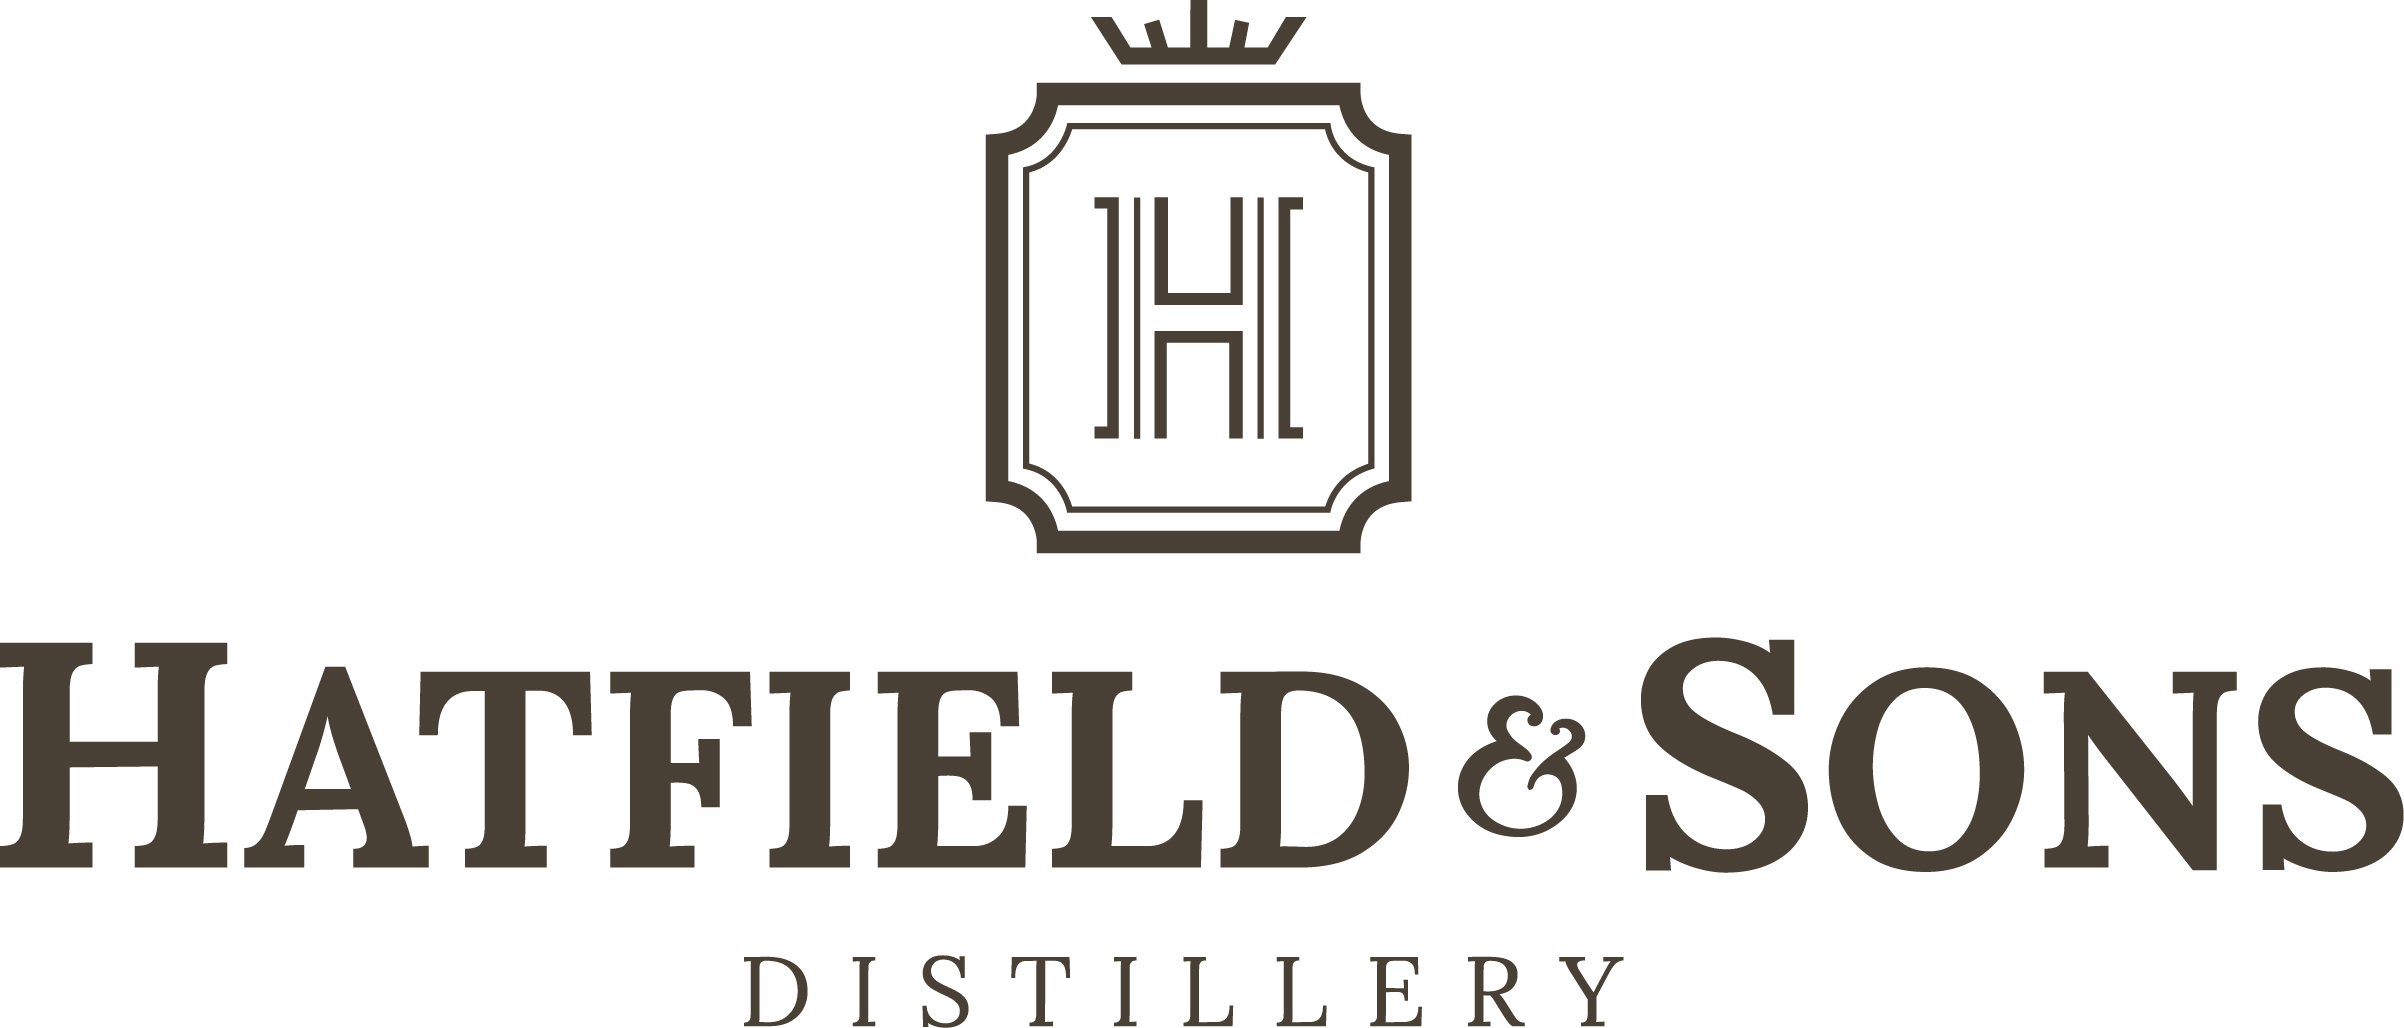 Hatfield & Sons Distillery